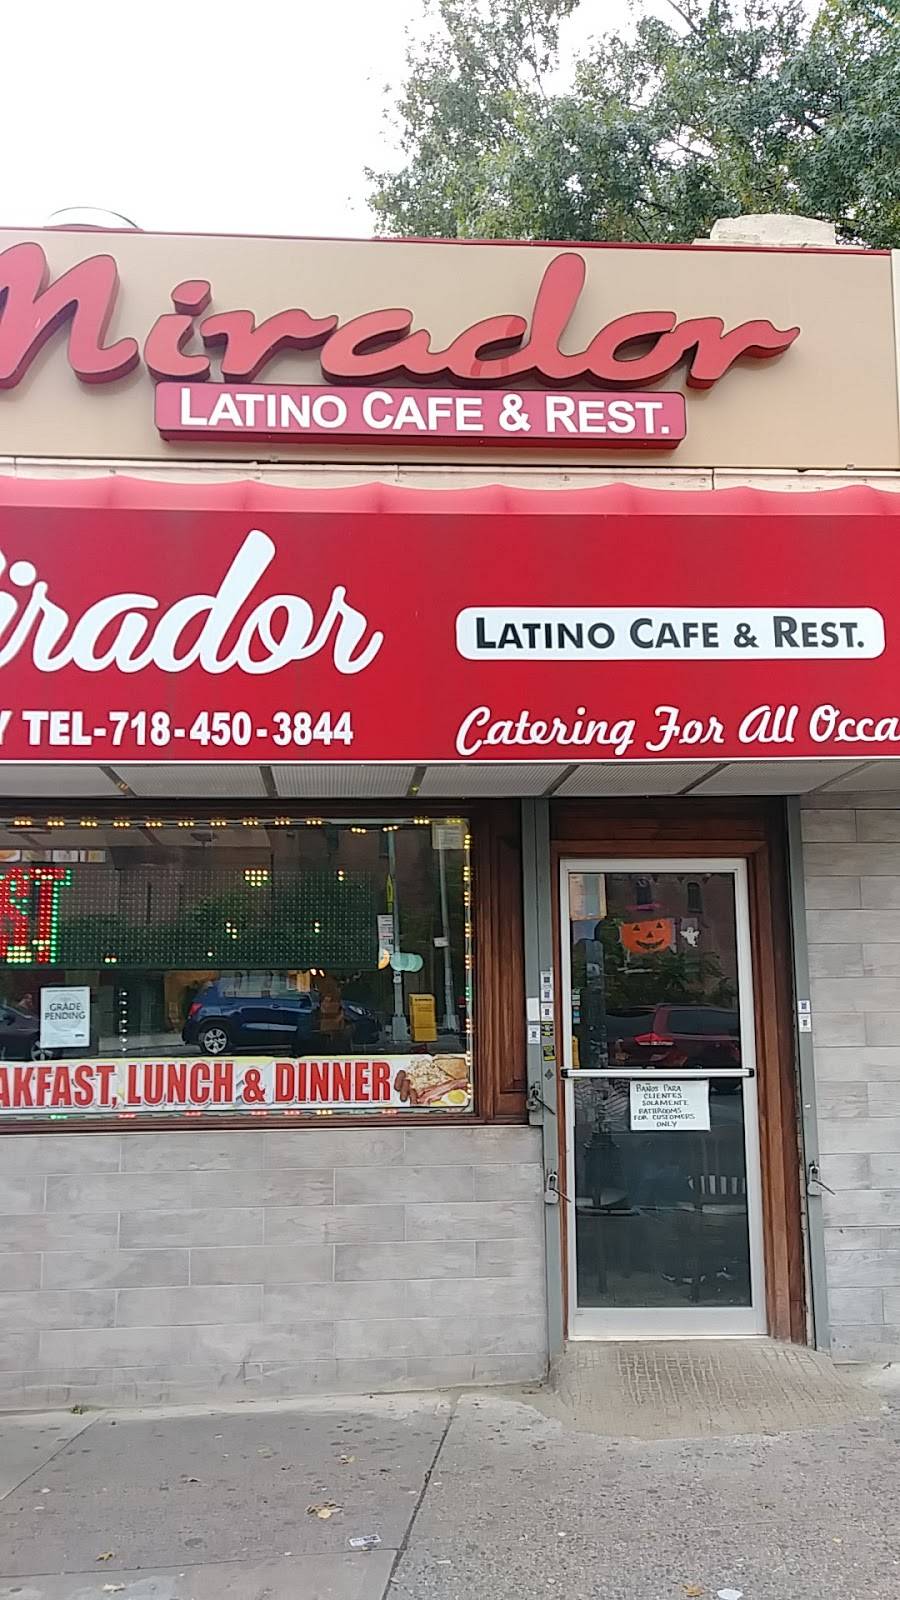 Mirador | restaurant | 44 W Kingsbridge Rd, Bronx, NY 10468, USA | 7184503844 OR +1 718-450-3844